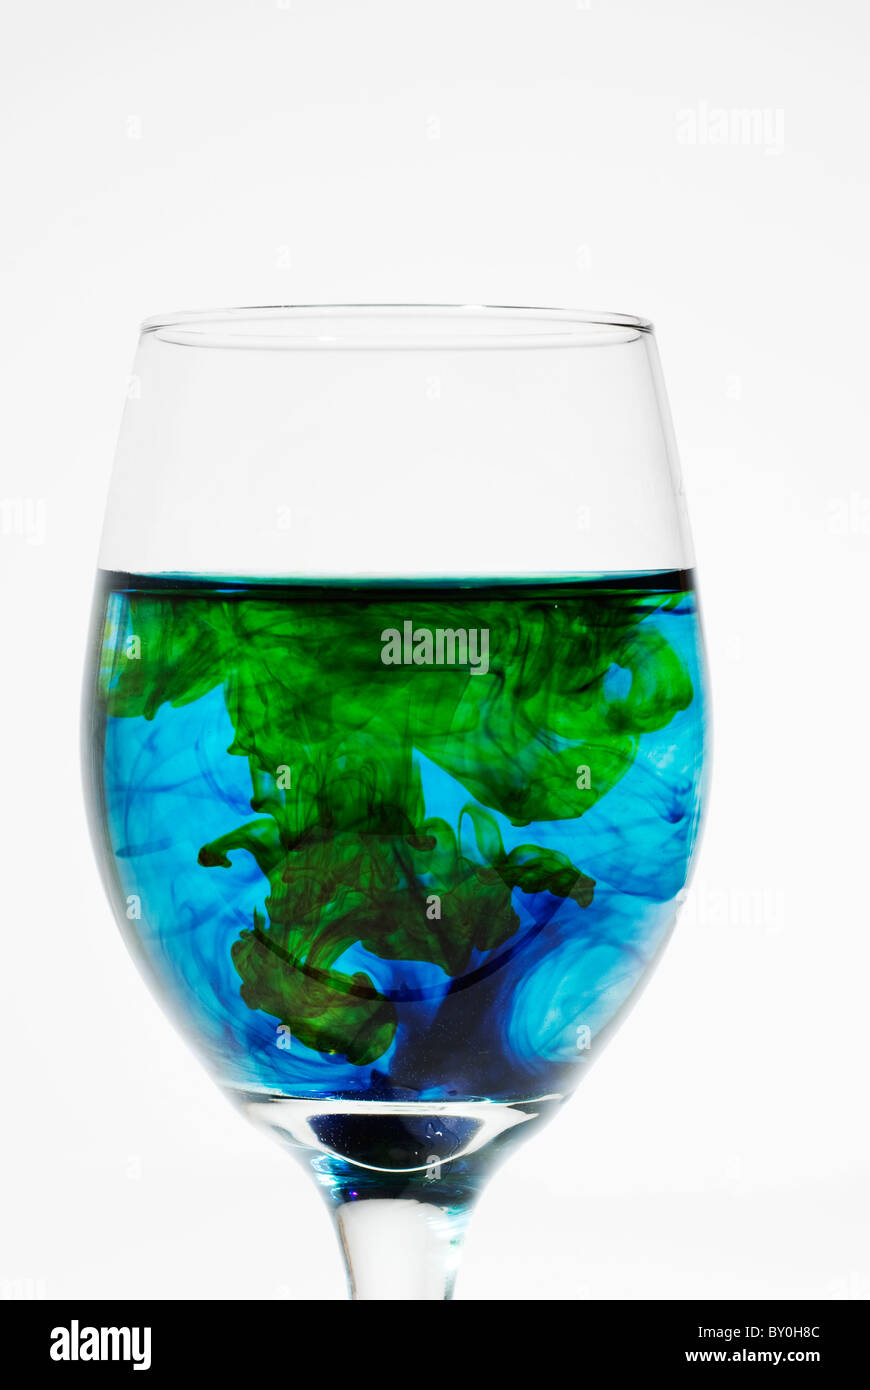 Food coloring swirled in wineglass Stock Photo